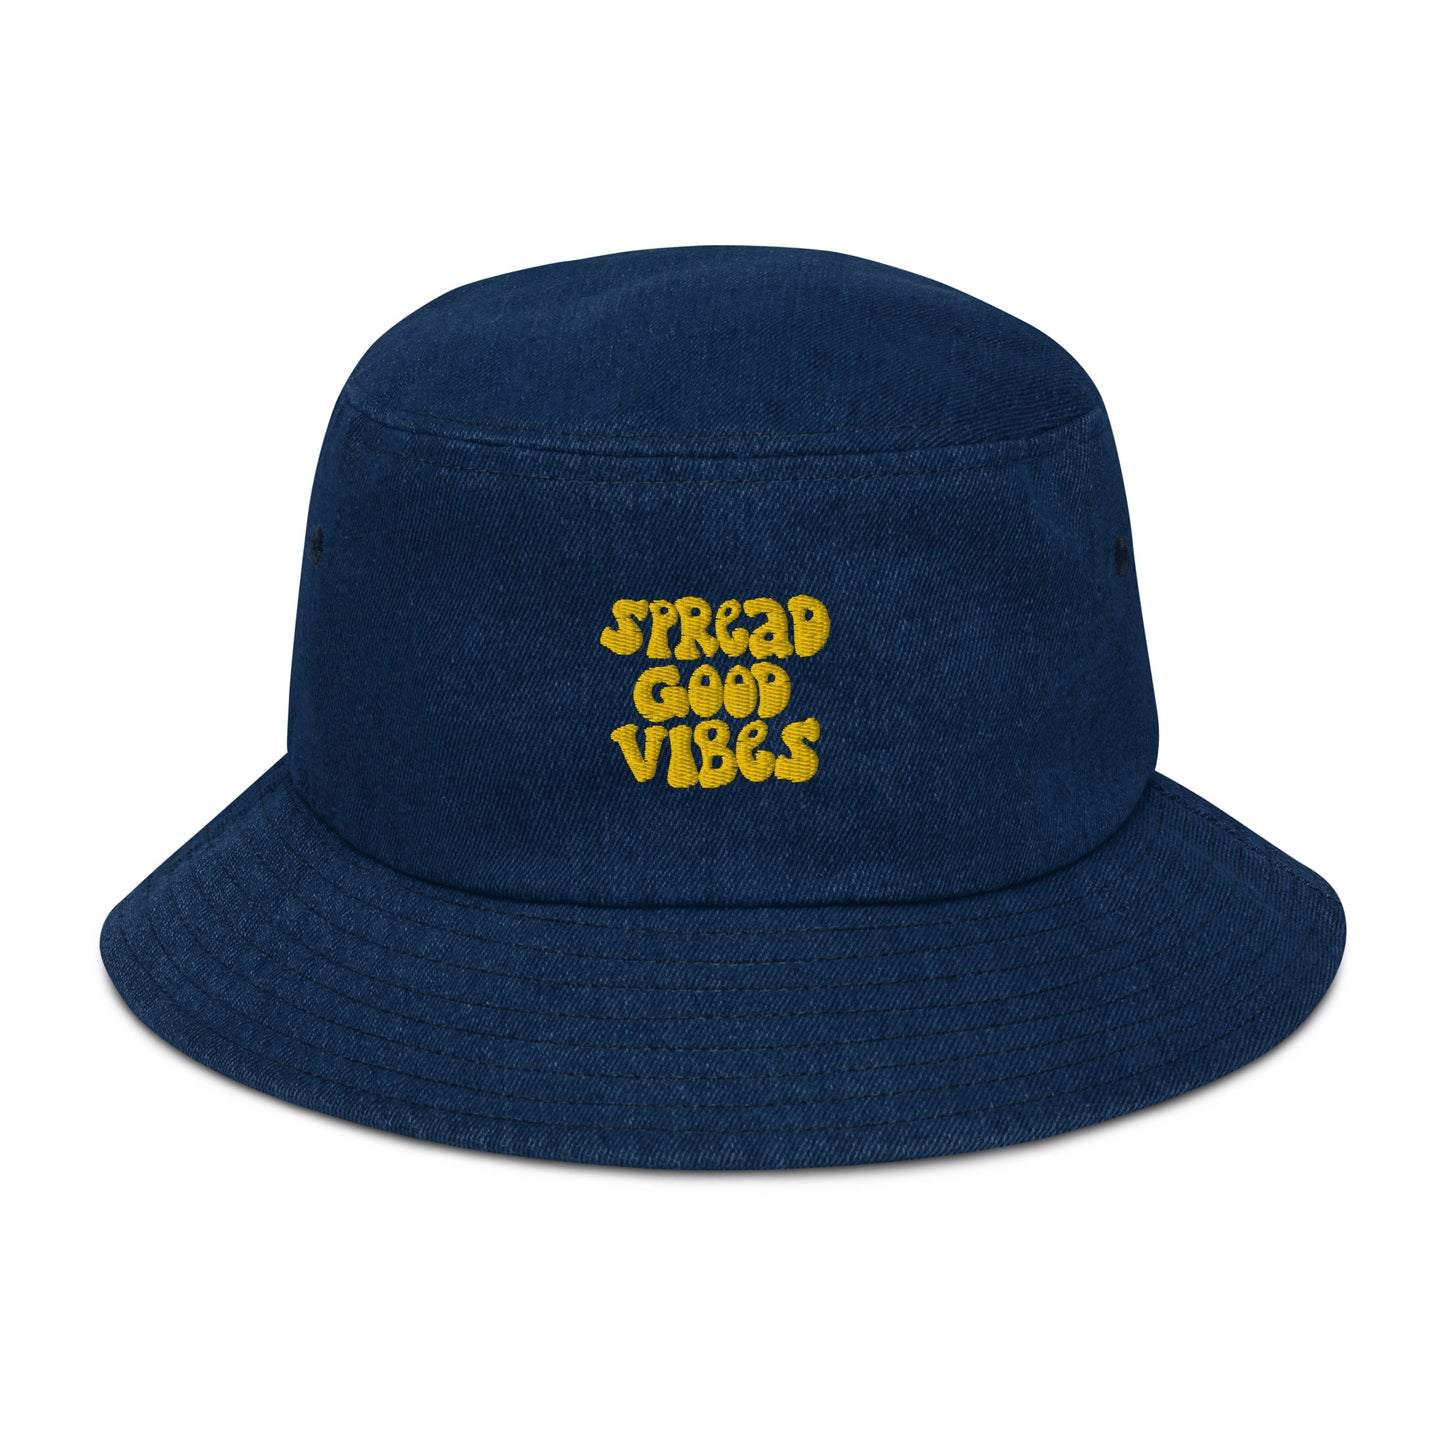 spread good vibes denim bucket hat - yellow